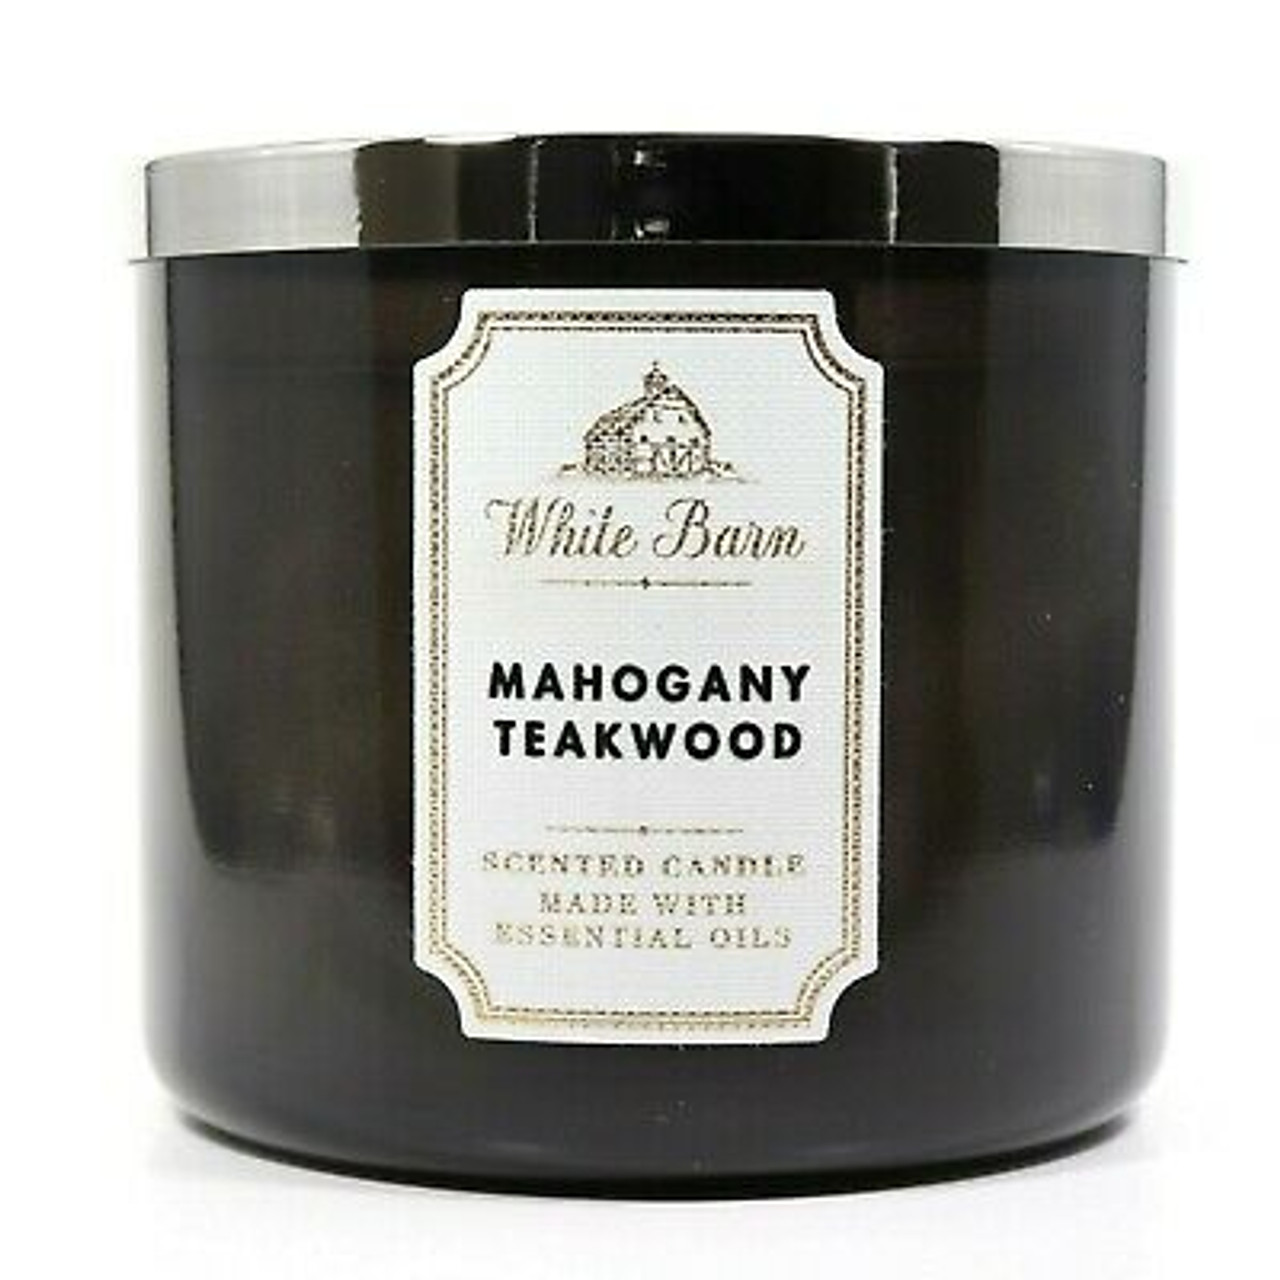 Bath & Body Works + Mahogany Teakwood 3-Wick Candle